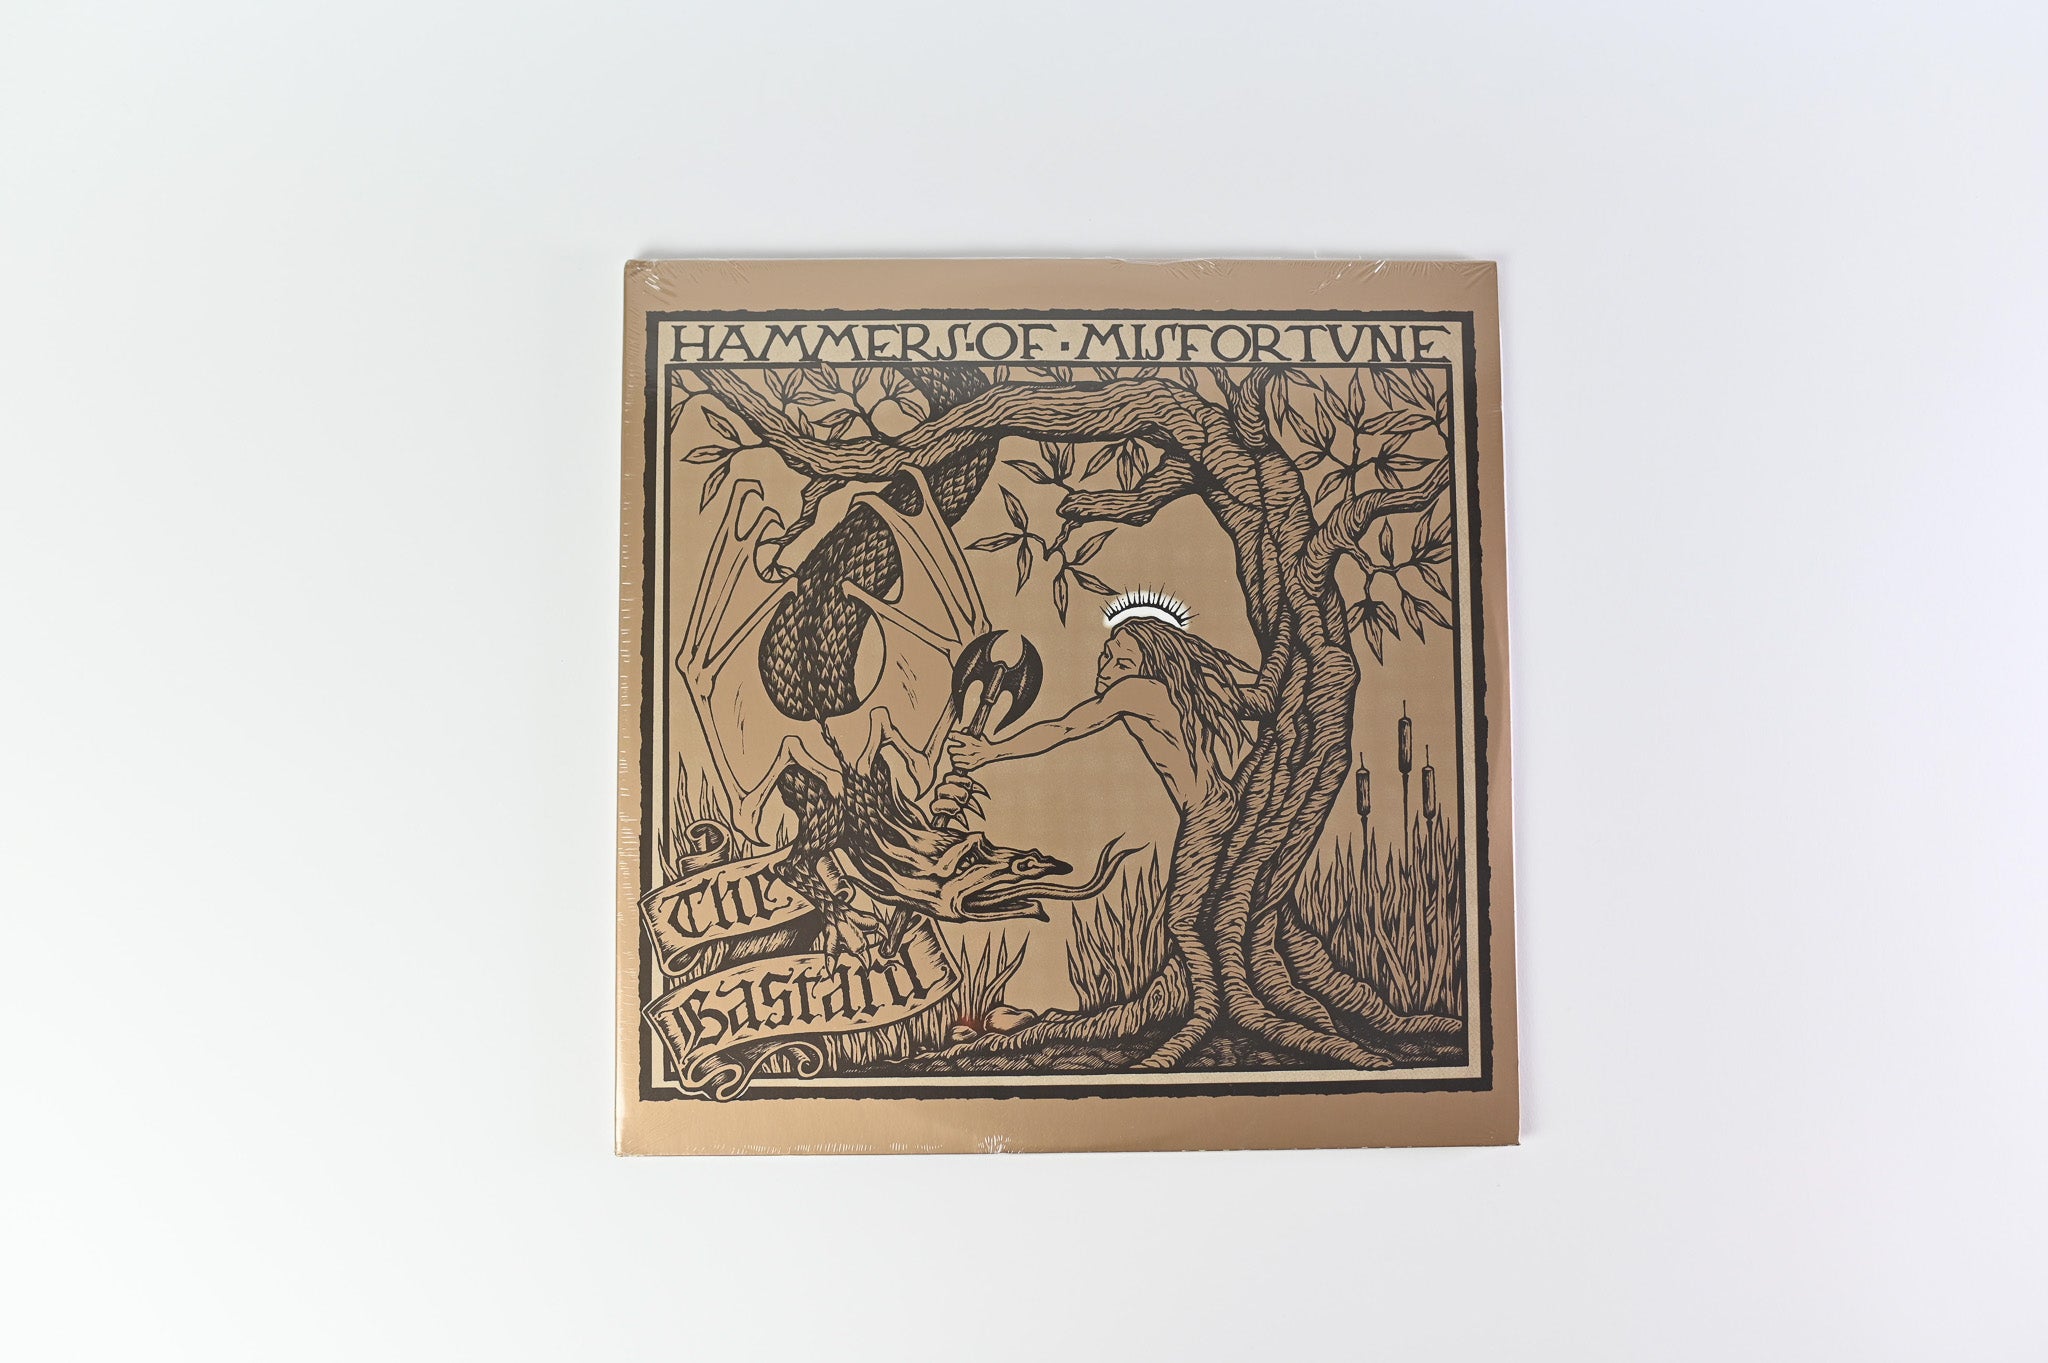 Hammers Of Misfortune - The Bastard on Cruz Del Sur Music Gold / Black Splatter Reissue Sealed